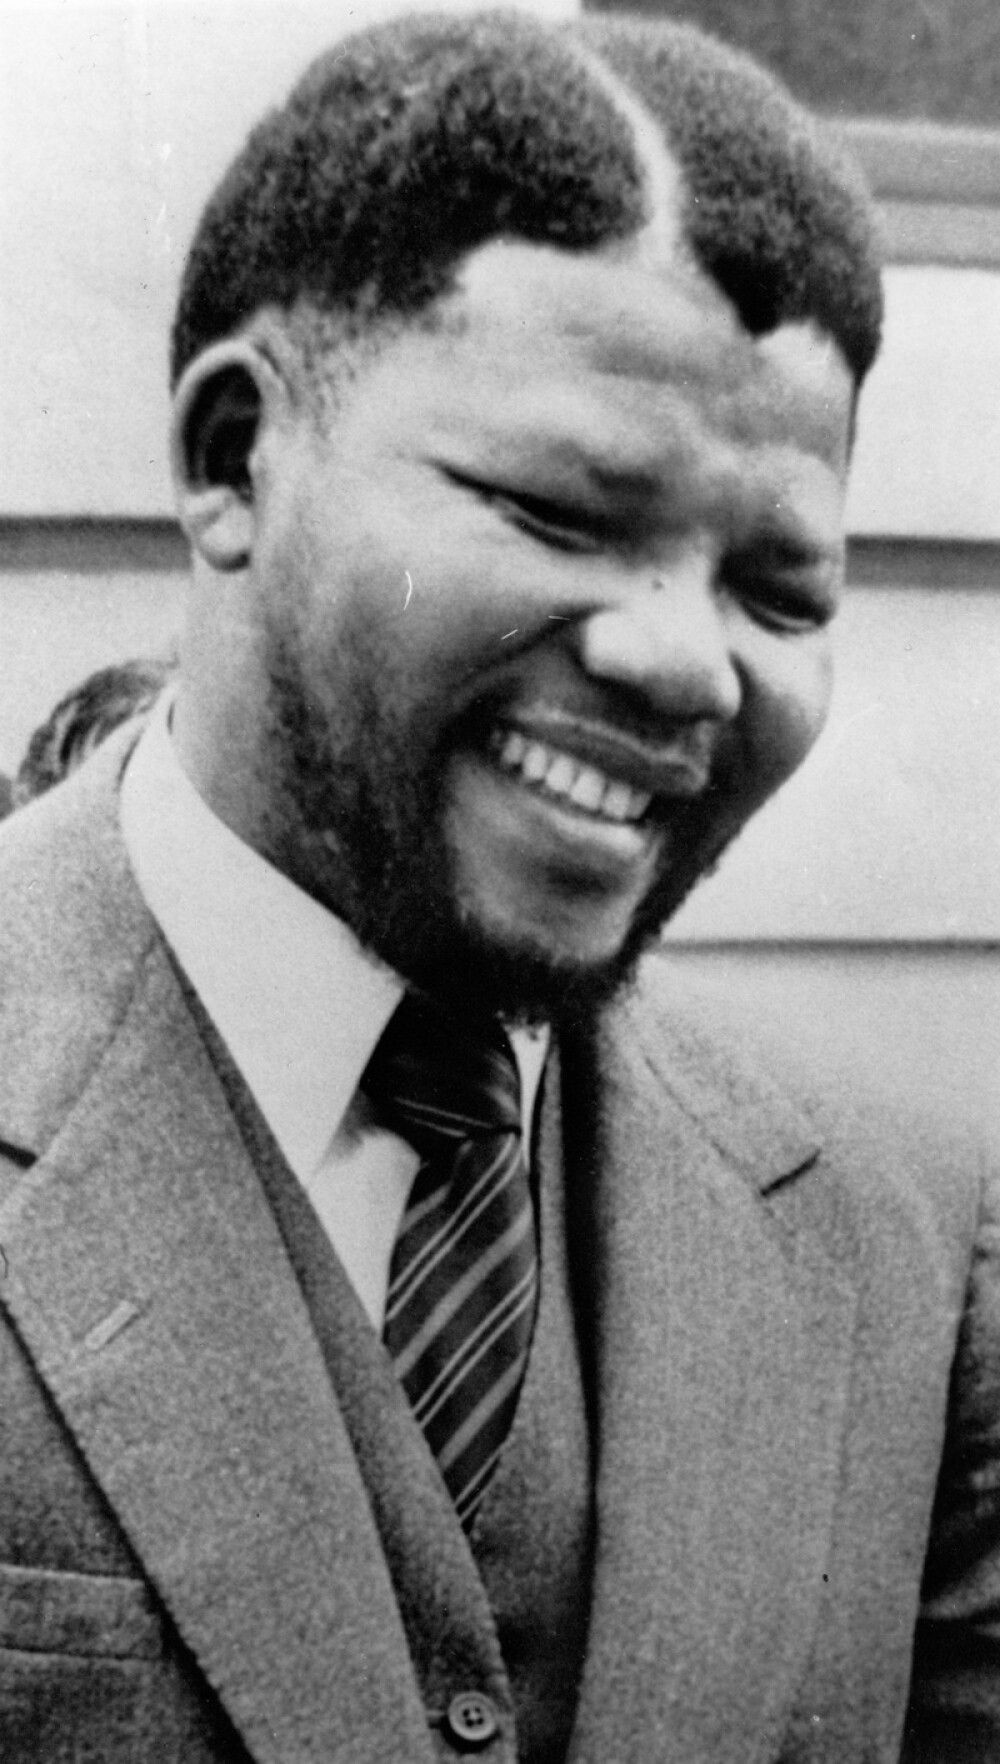 MANDELA DAY: Eroul anti-apartheid implineste azi 95 de ani. Viata sa in imagini - Imaginea 1